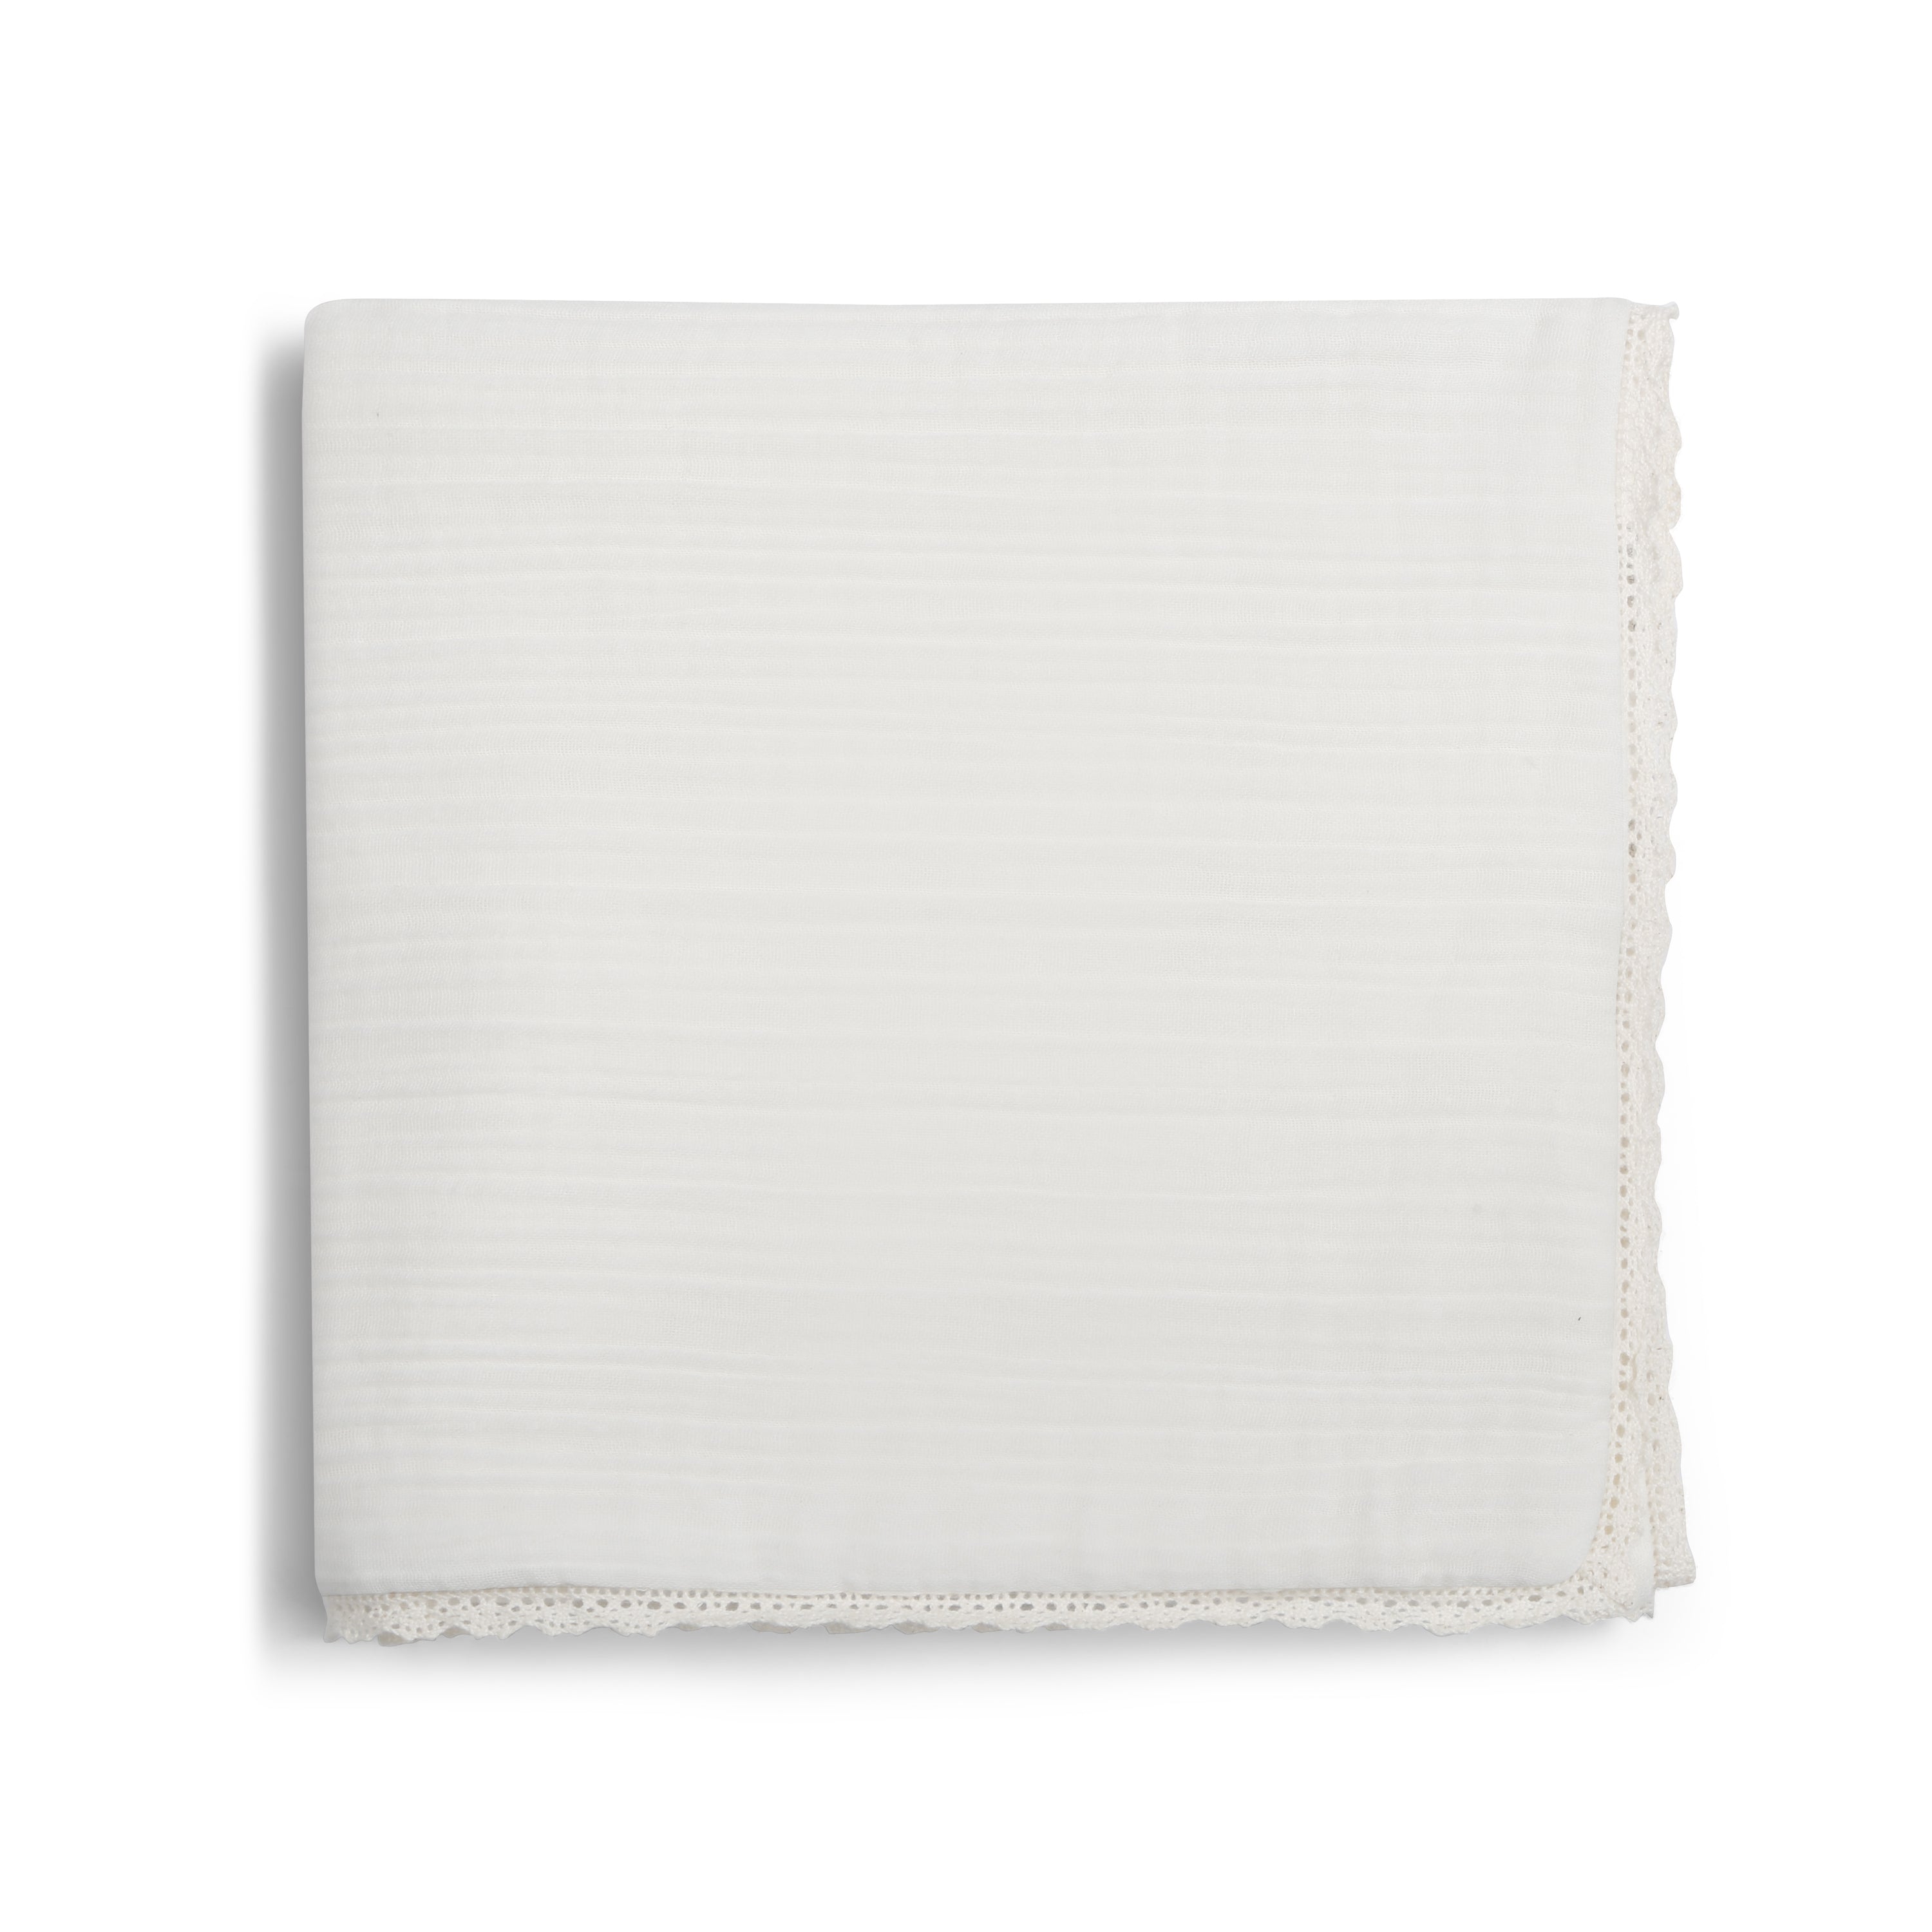 White folded Organic Cotton Muslin Blanket - Ivory + Ivory Lace, displayed on a plain white background by Makemake Organics.